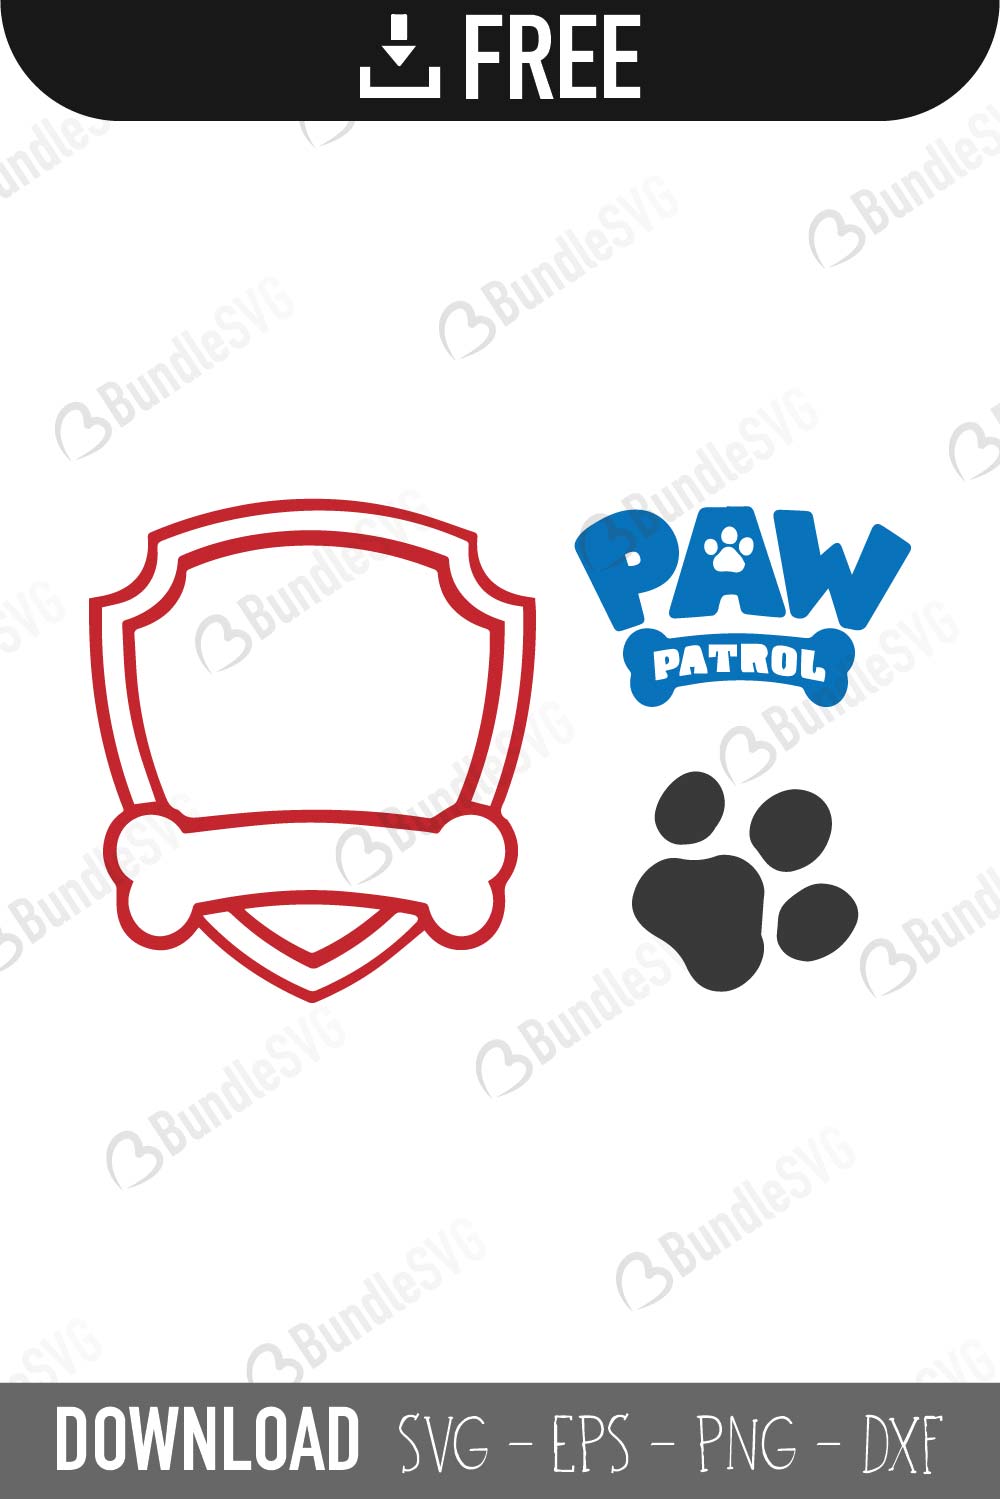 paw patrol images svg free